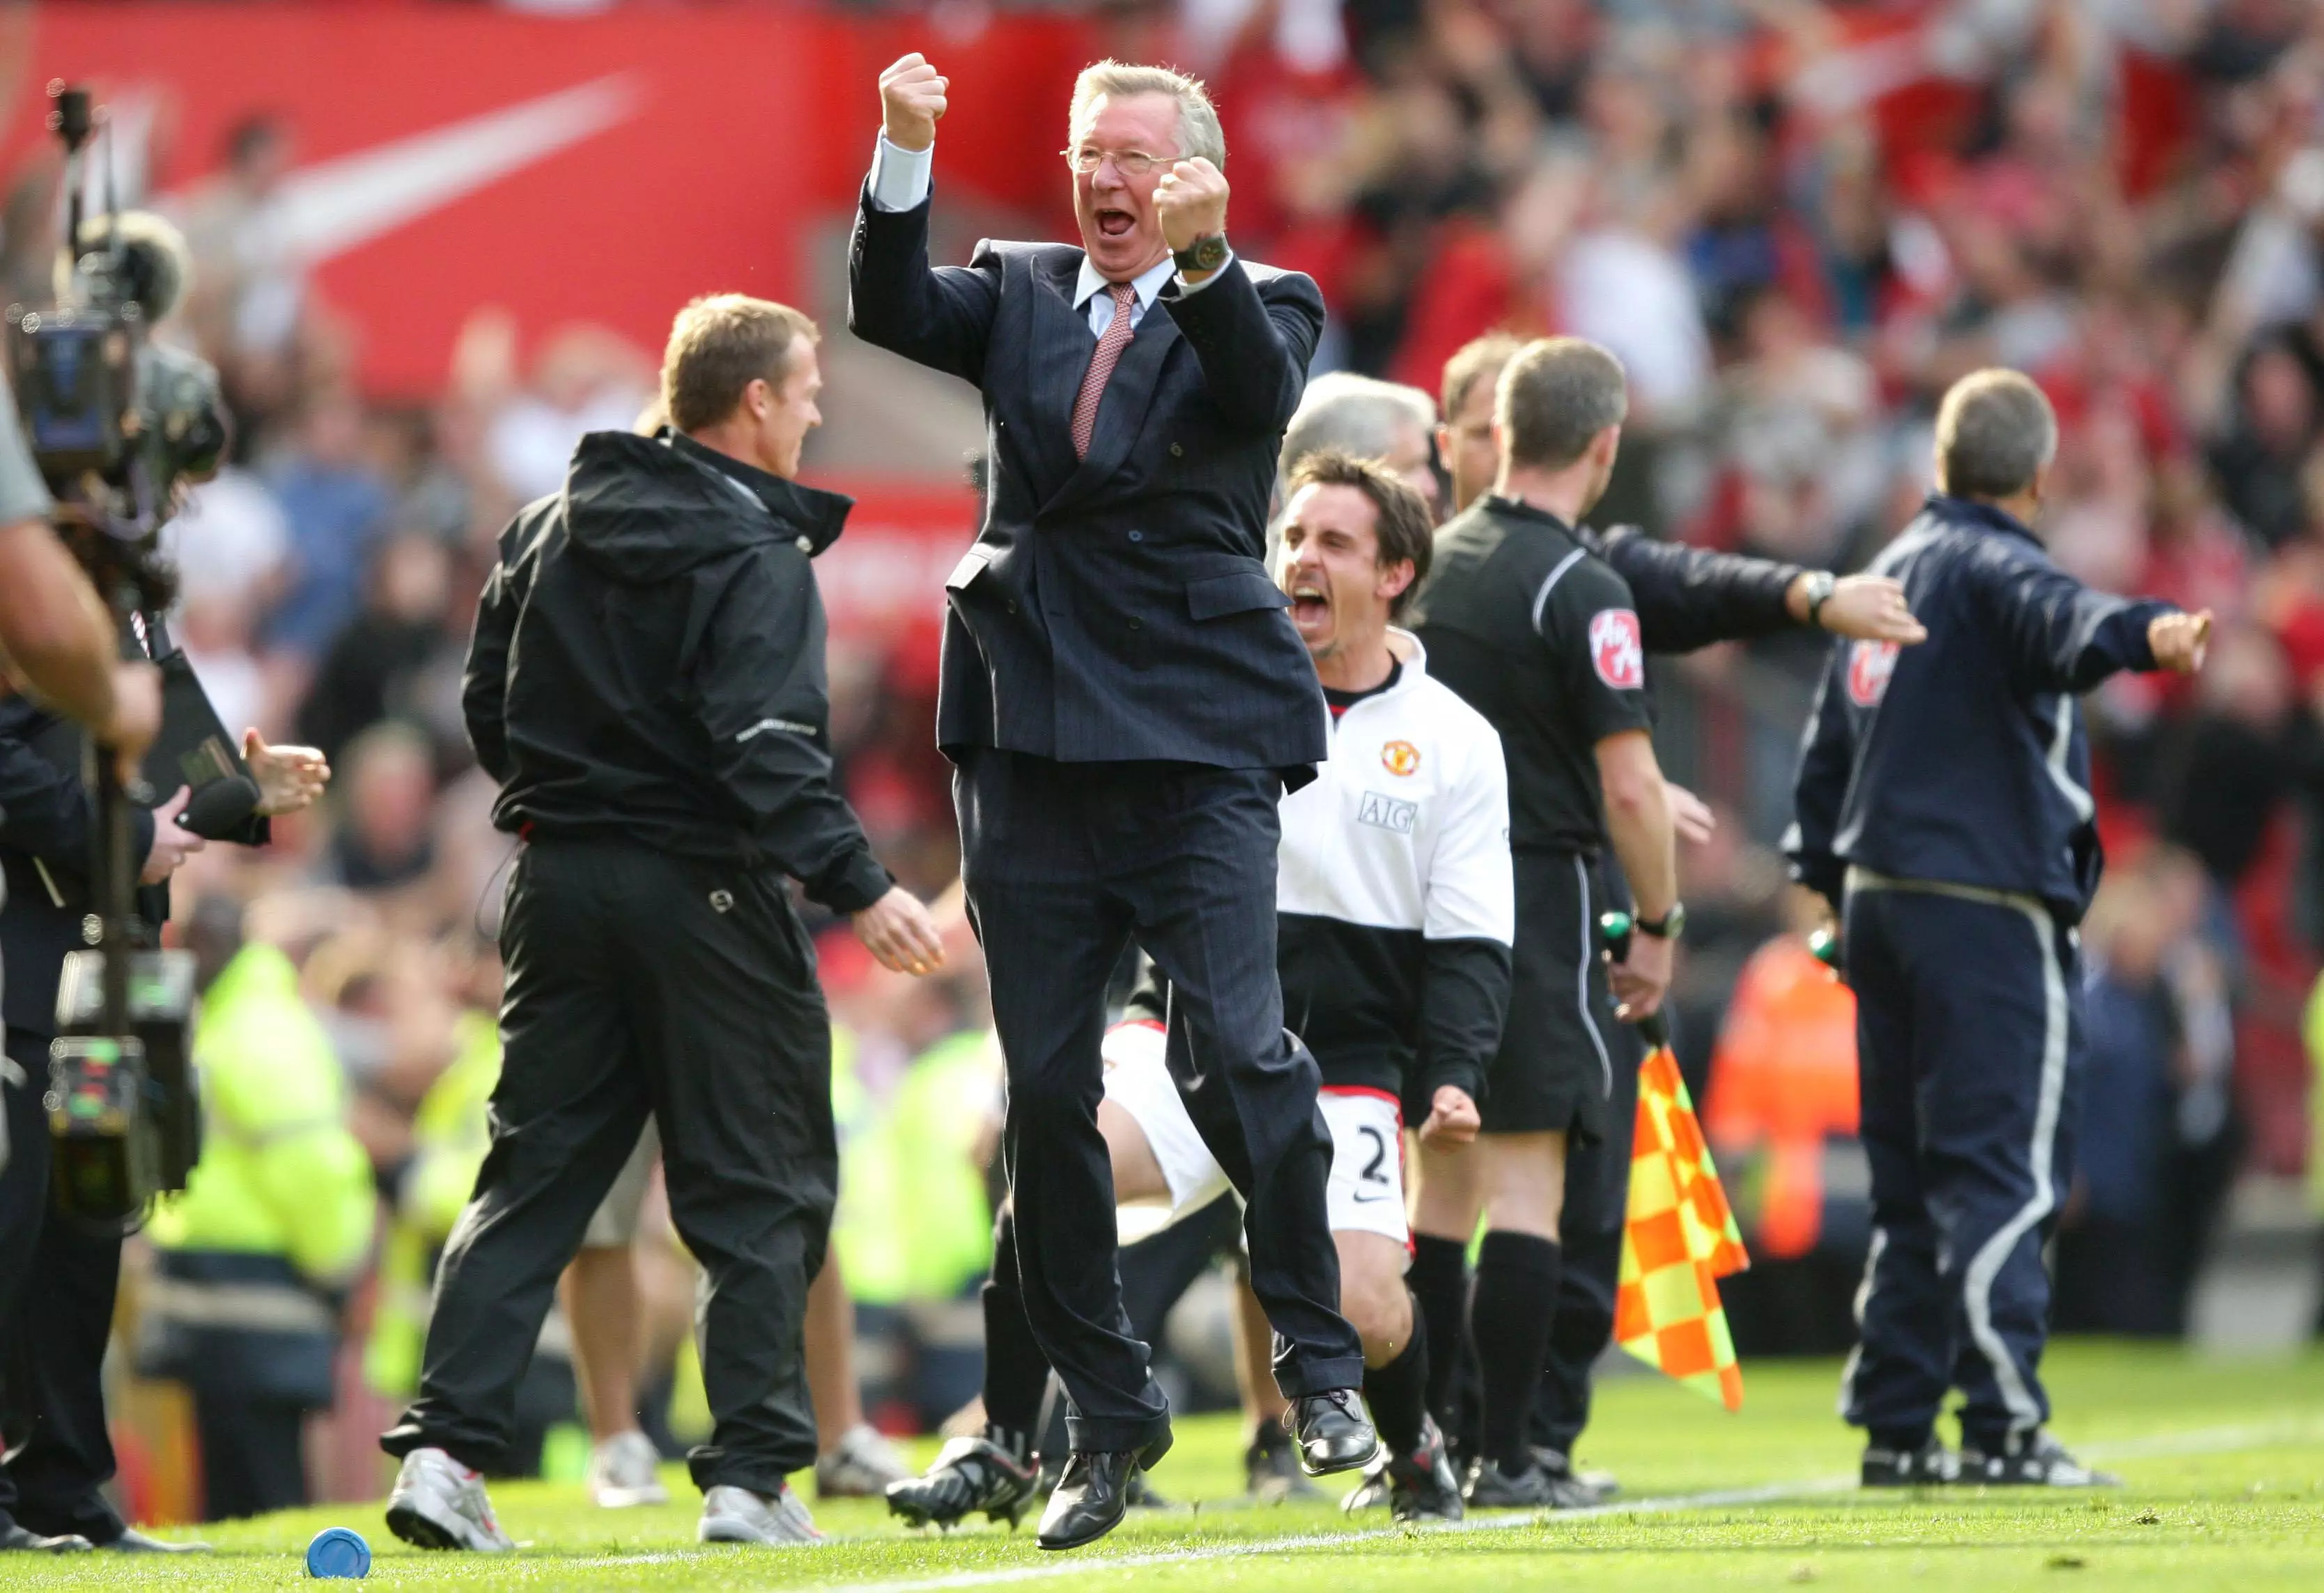 Sir Alex Ferguson celebrating the derby victory (Image